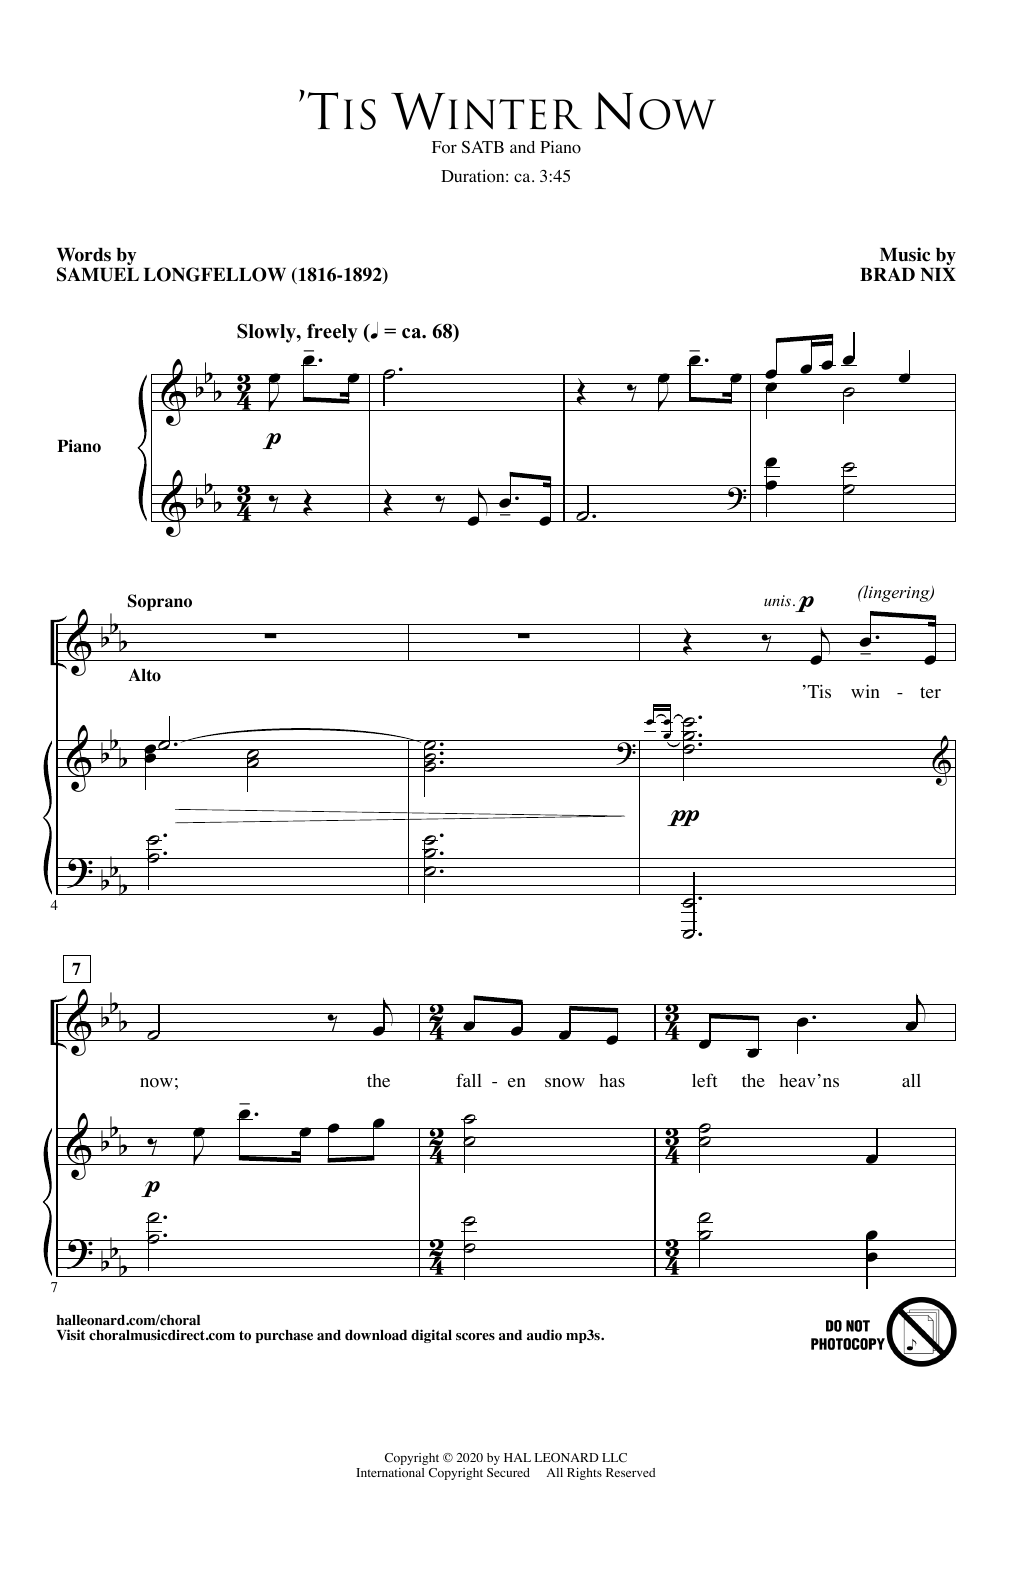 Samuel Longfellow and Brad Nix 'Tis Winter Now Sheet Music Notes & Chords for SATB Choir - Download or Print PDF